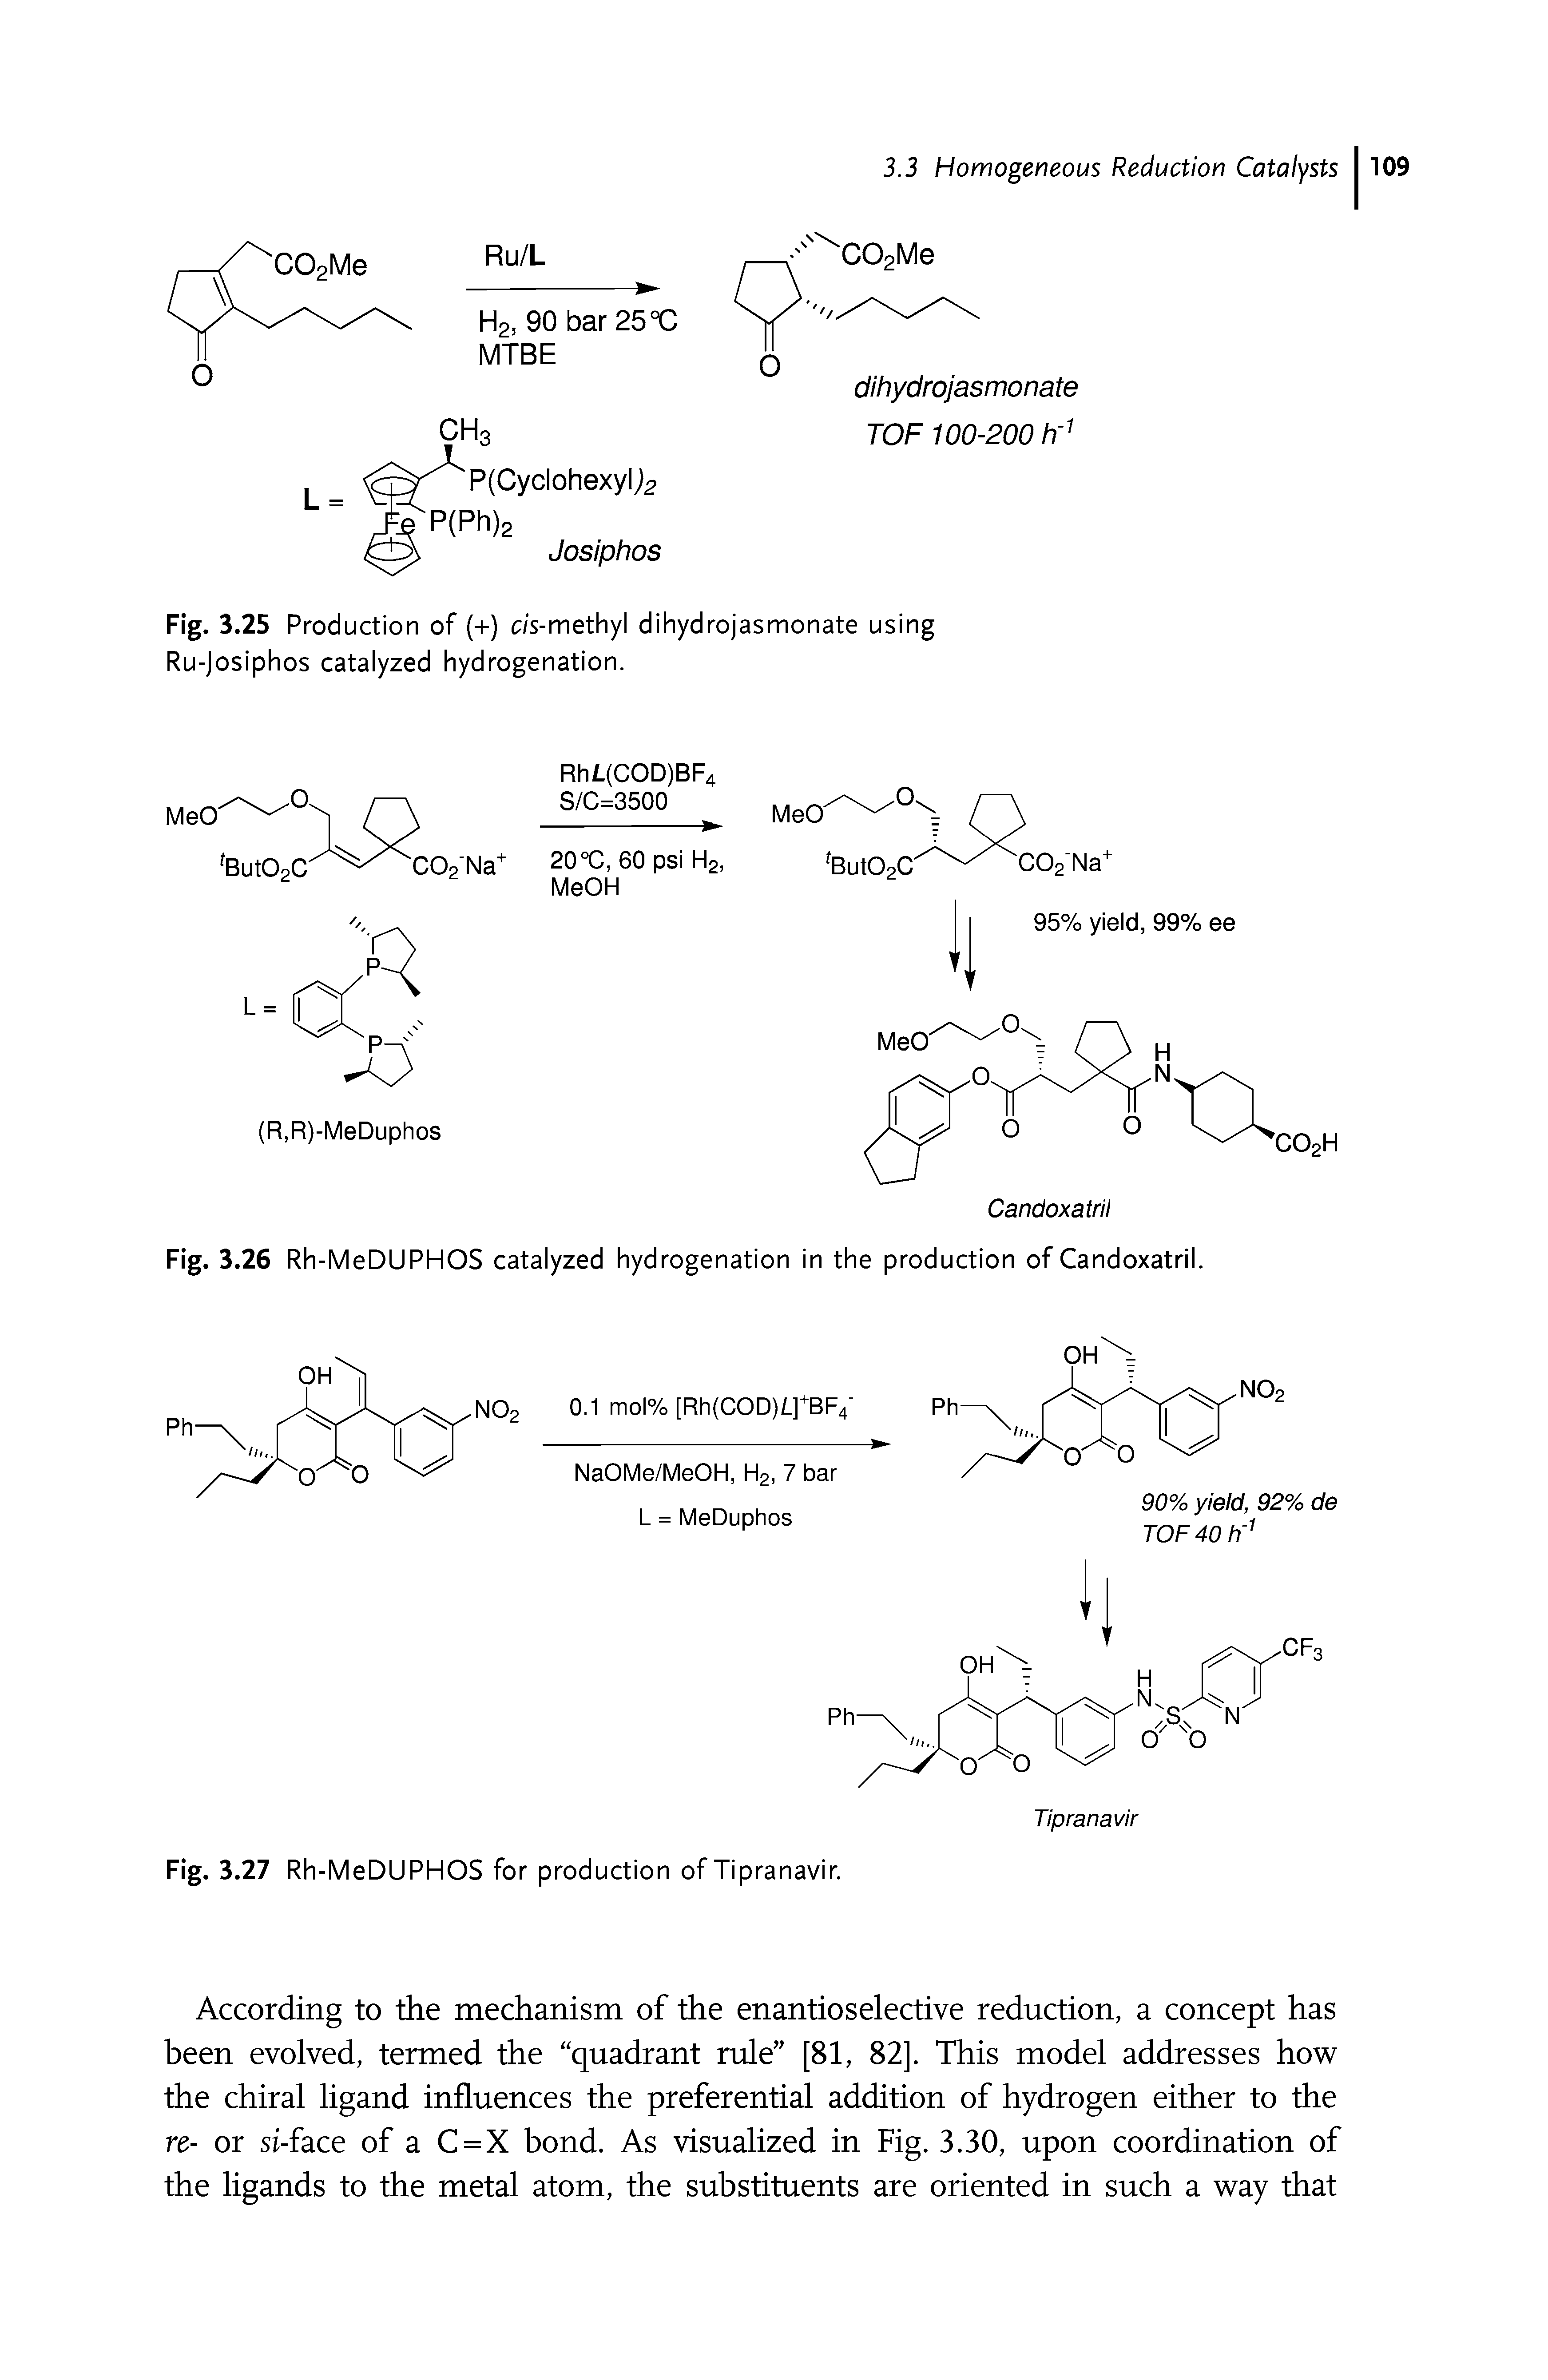 Fig. 3.25 Production of (+) cis-methyl dihydrojasmonate using Ru-Josiphos catalyzed hydrogenation.